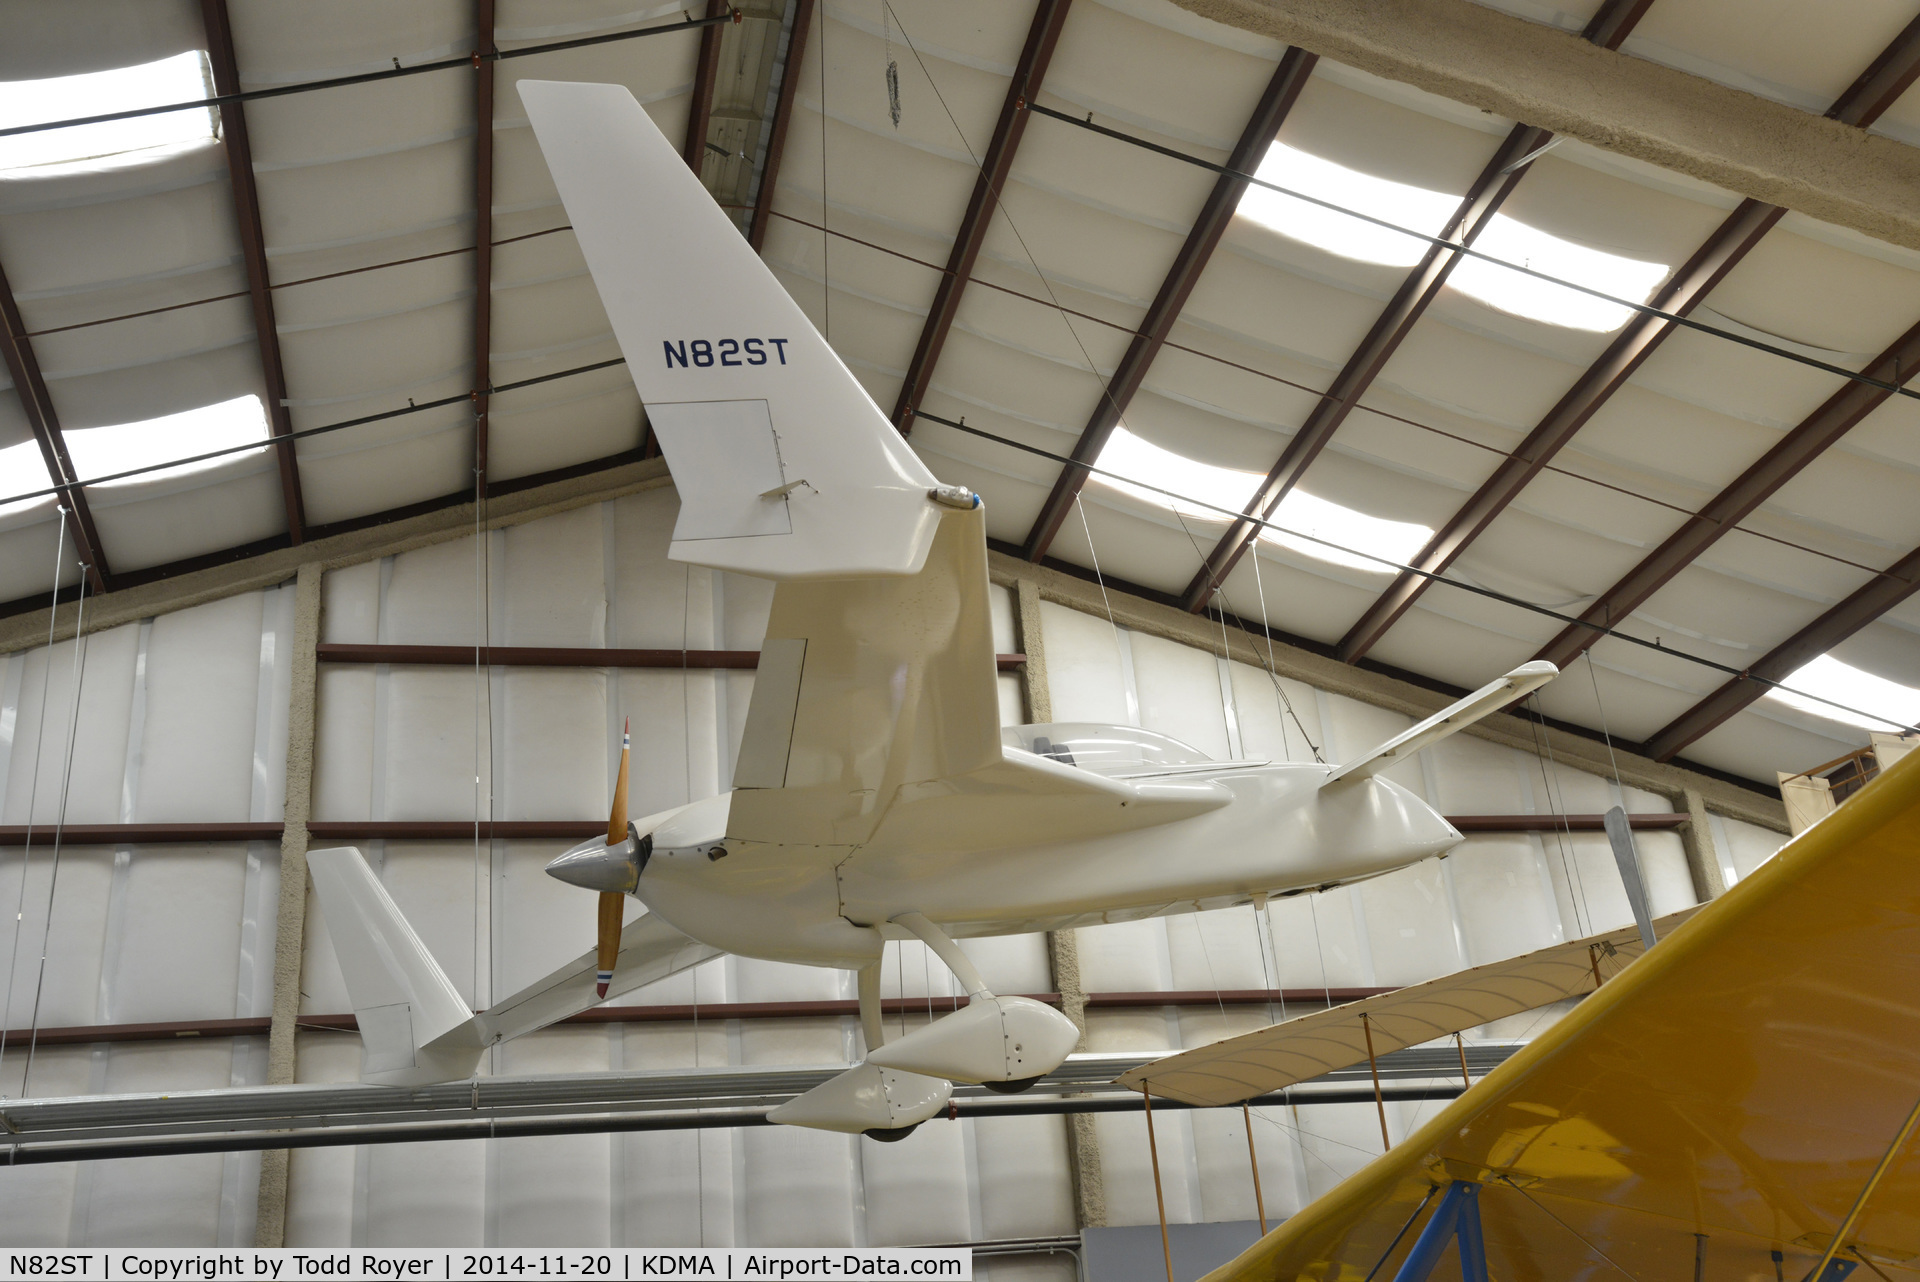 N82ST, Rutan Long-EZ C/N 442, On Display at the Pima Air and Space Museum